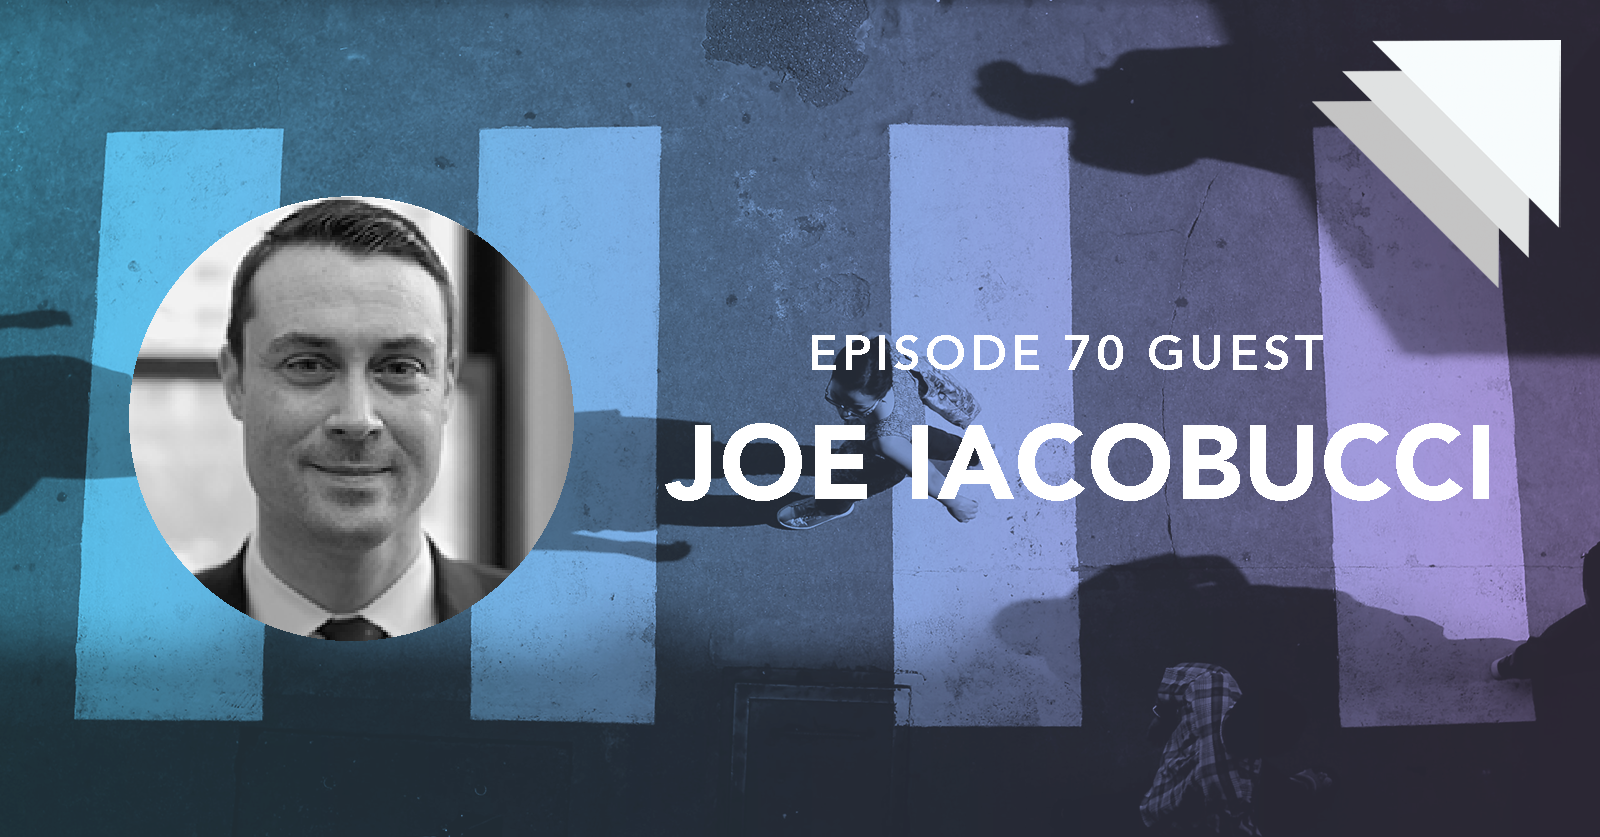 Episode 70 guest Joe Iacobucci